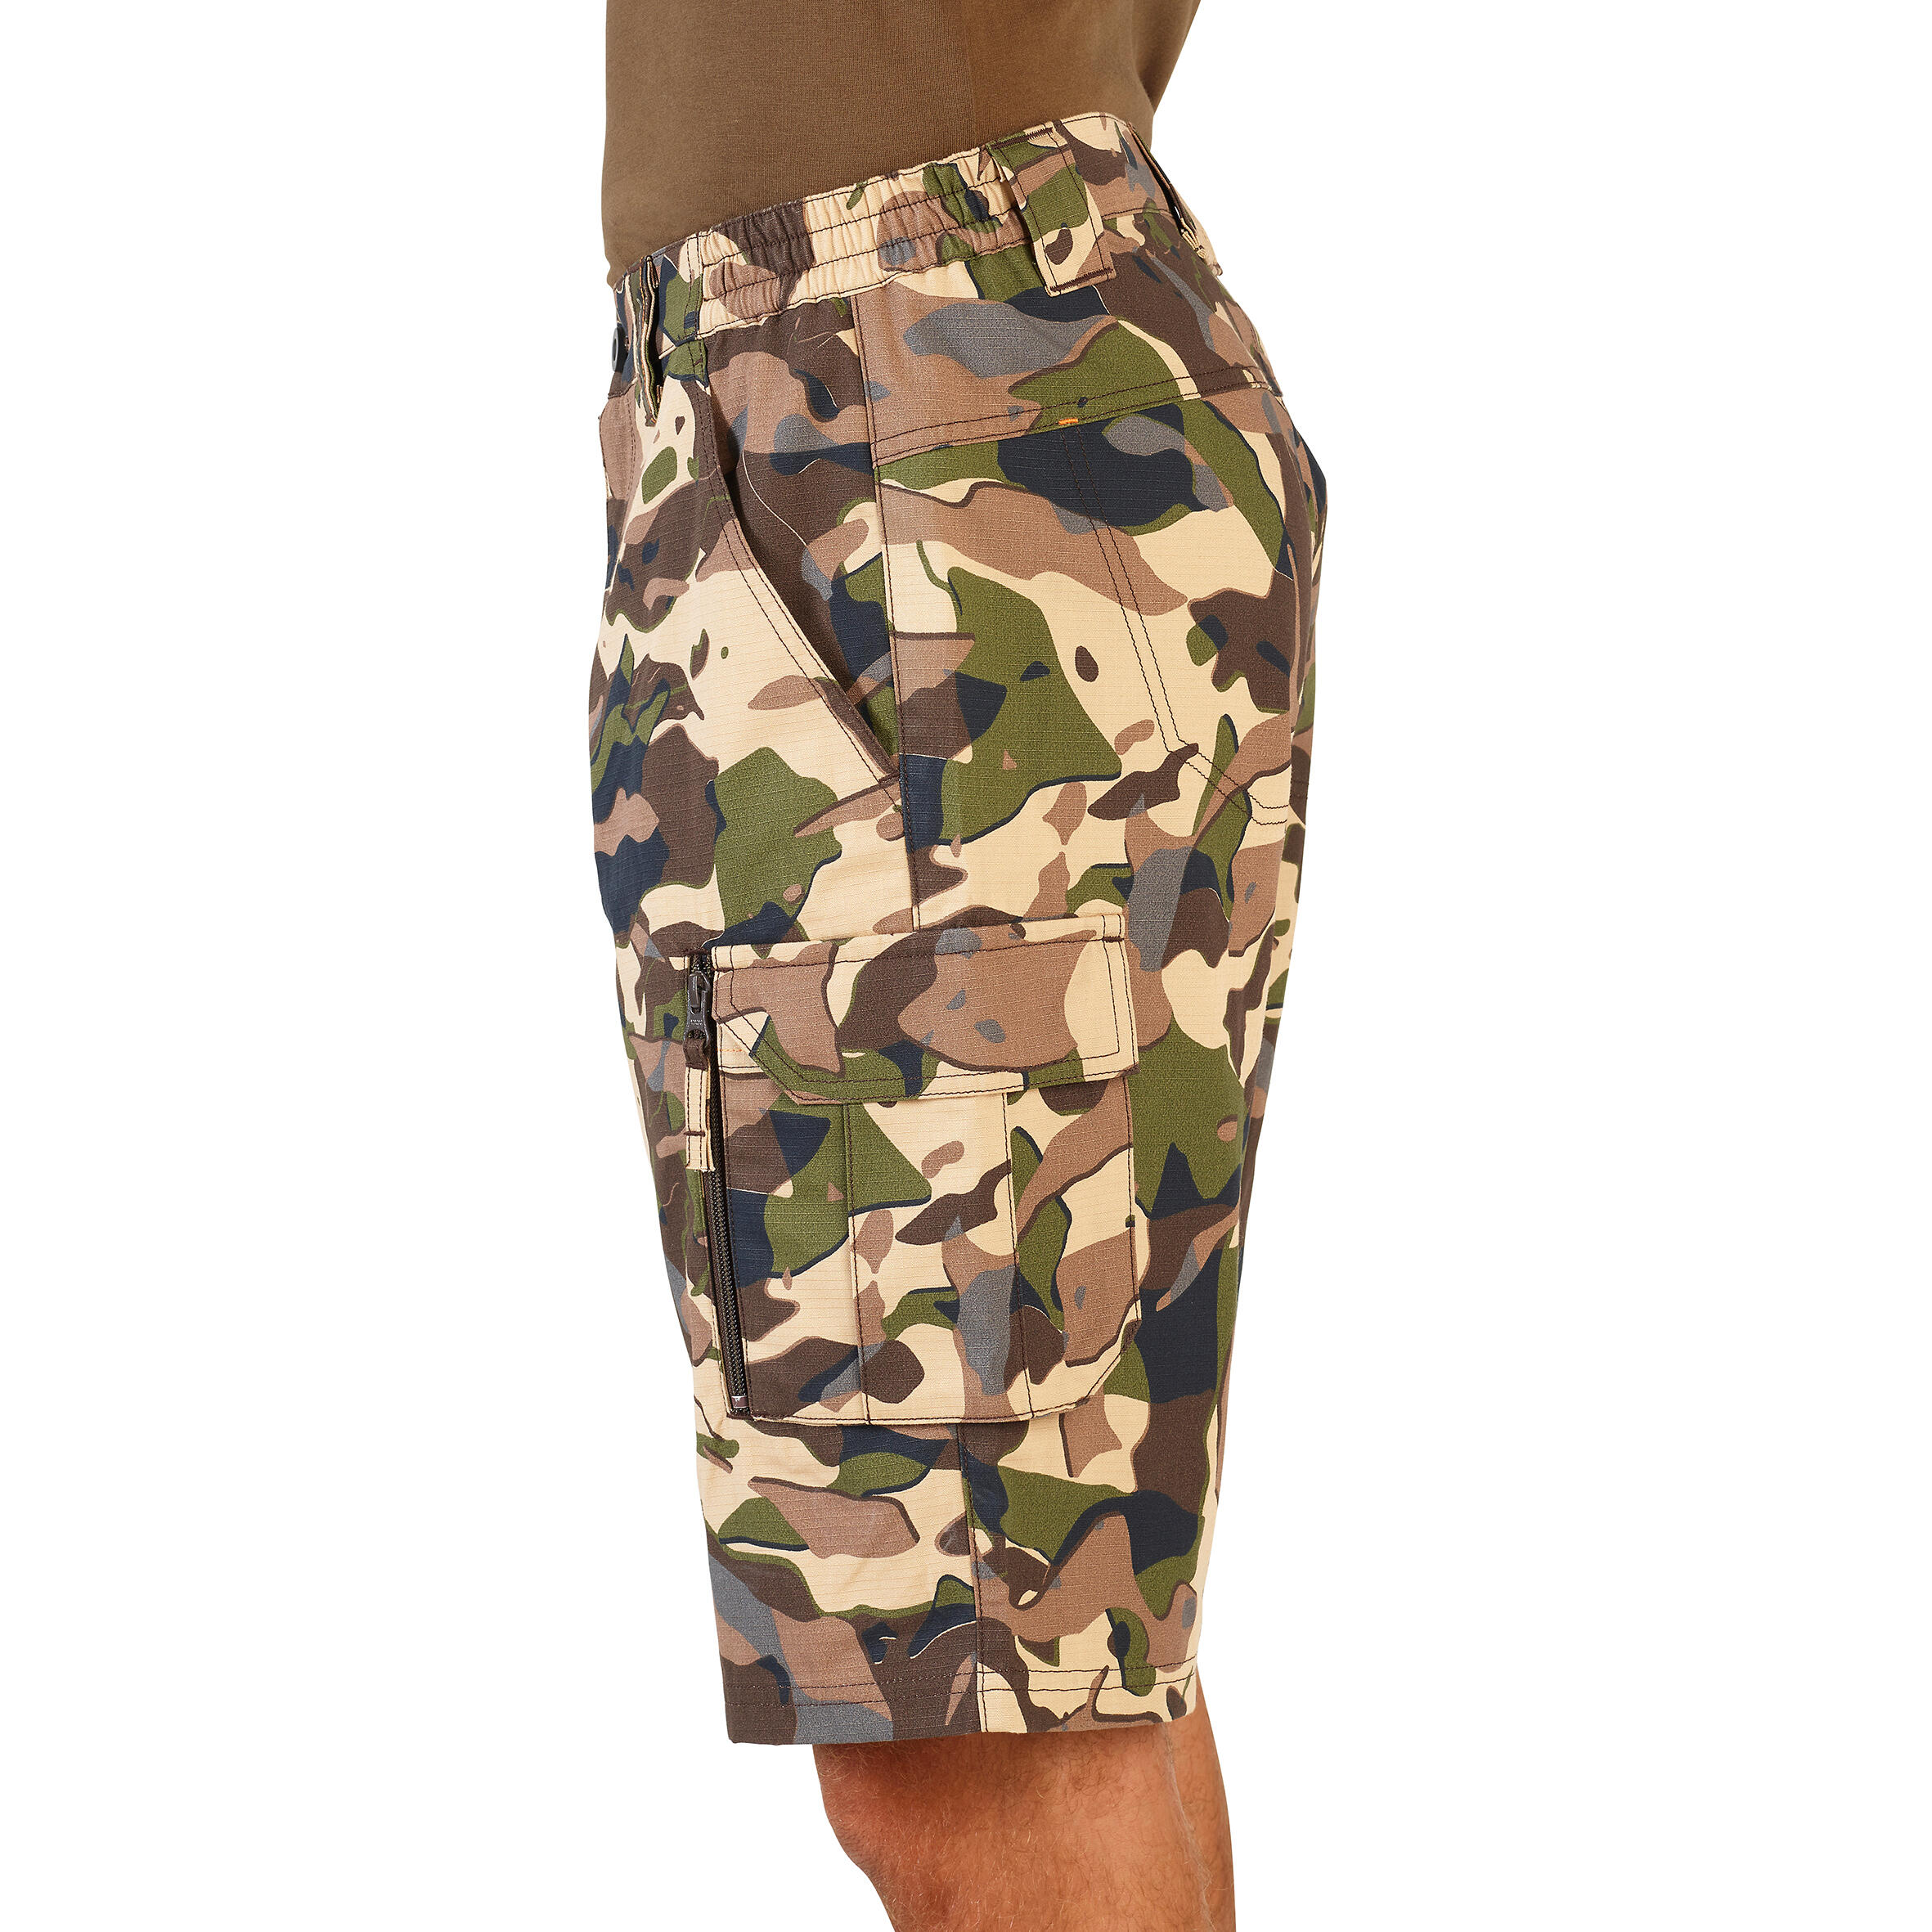 Bermuda shorts 500 - Woodland V1 brown LTD camouflage 5/10